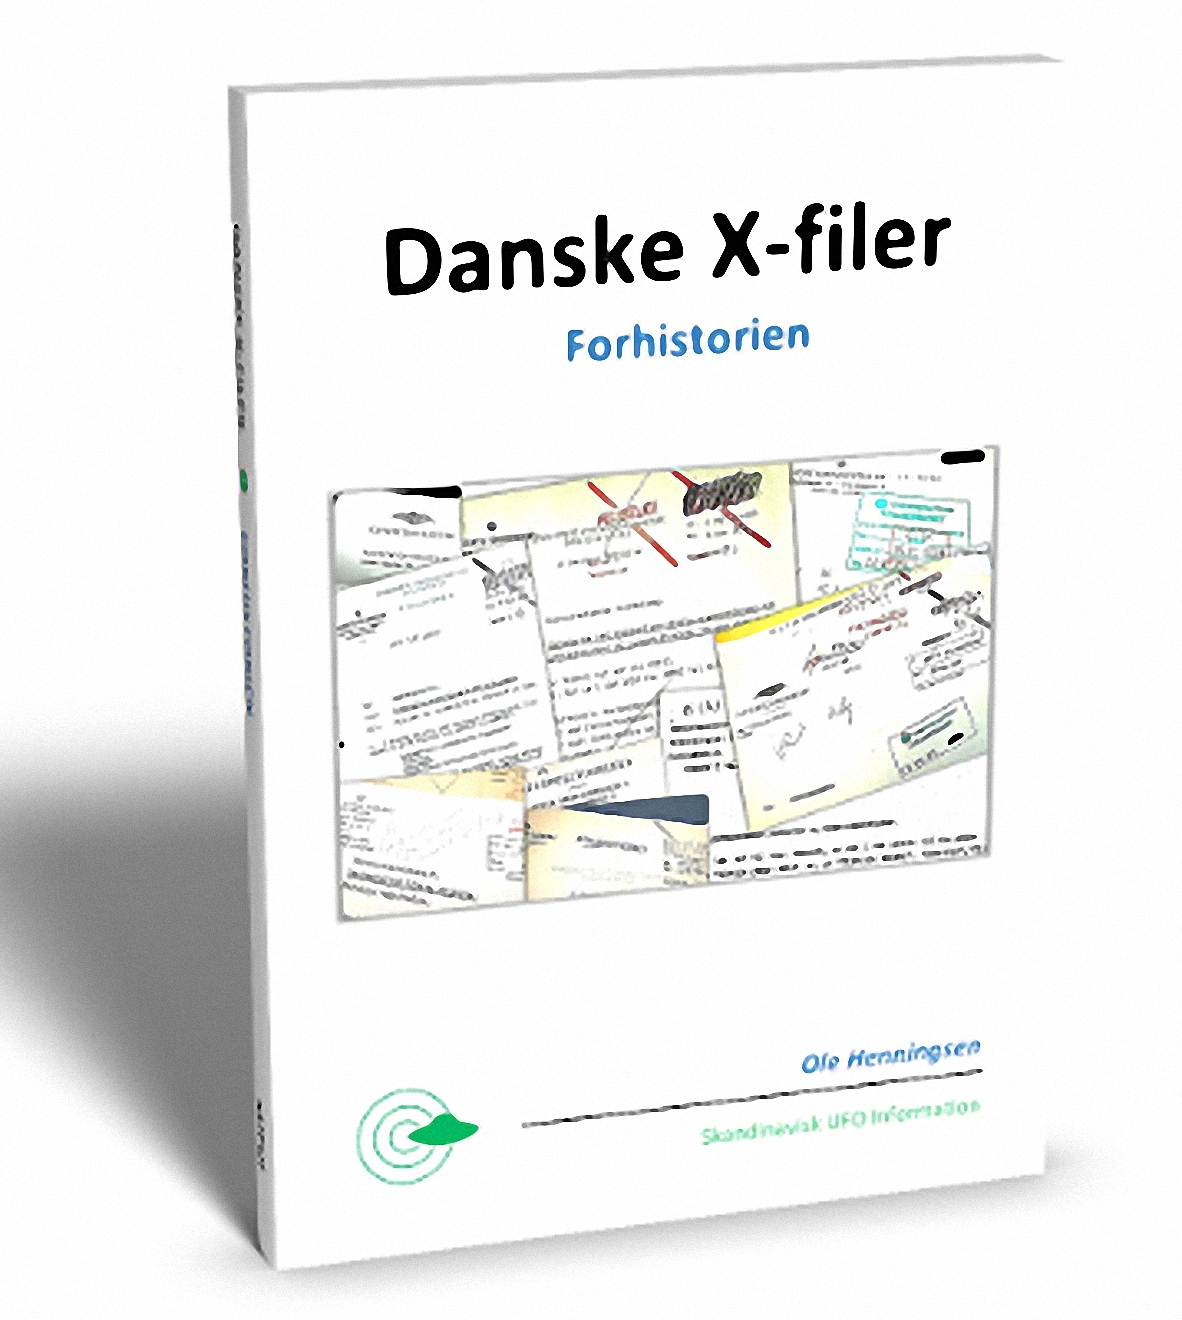 08-3d-book-danske-x-filer-forhistorien-300-oh